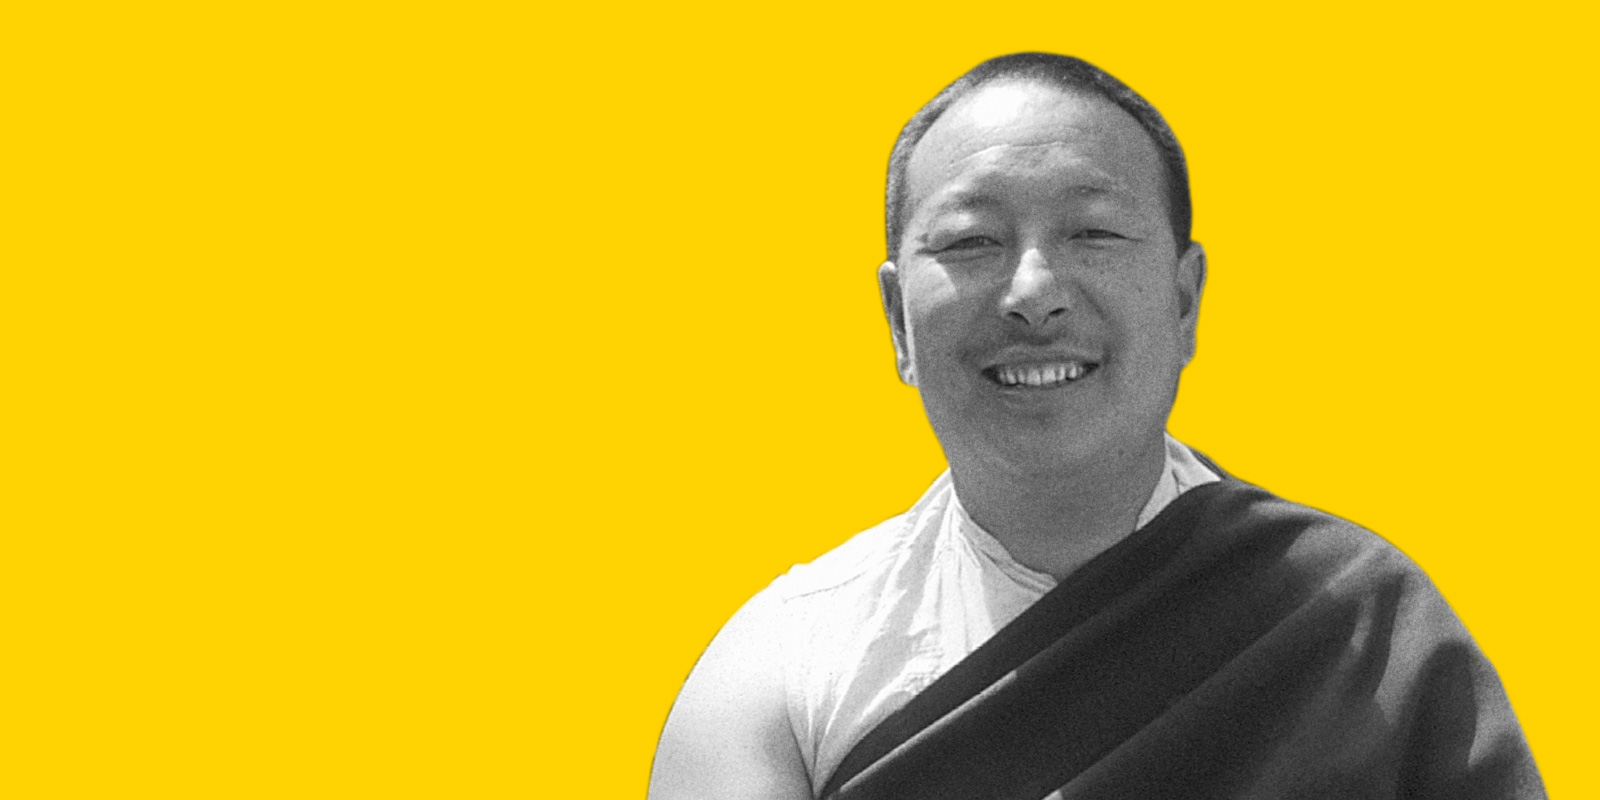 Bangri Rinpoche